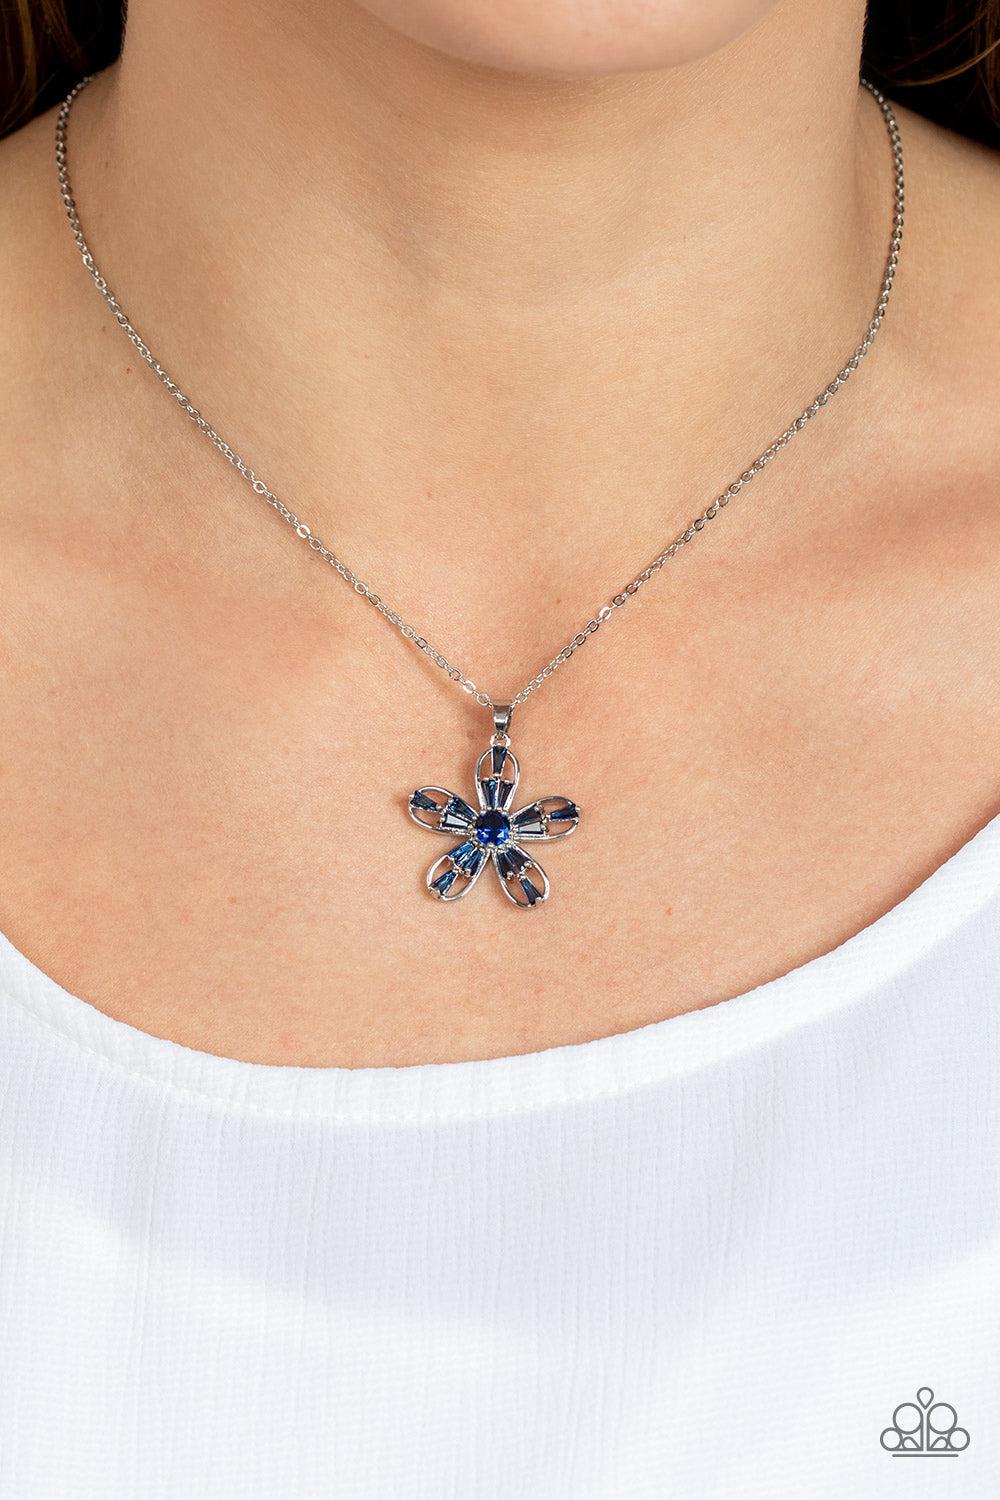 Botanical Ballad Blue Rhinestone Flower Necklace - Paparazzi Accessories-on model - CarasShop.com - $5 Jewelry by Cara Jewels